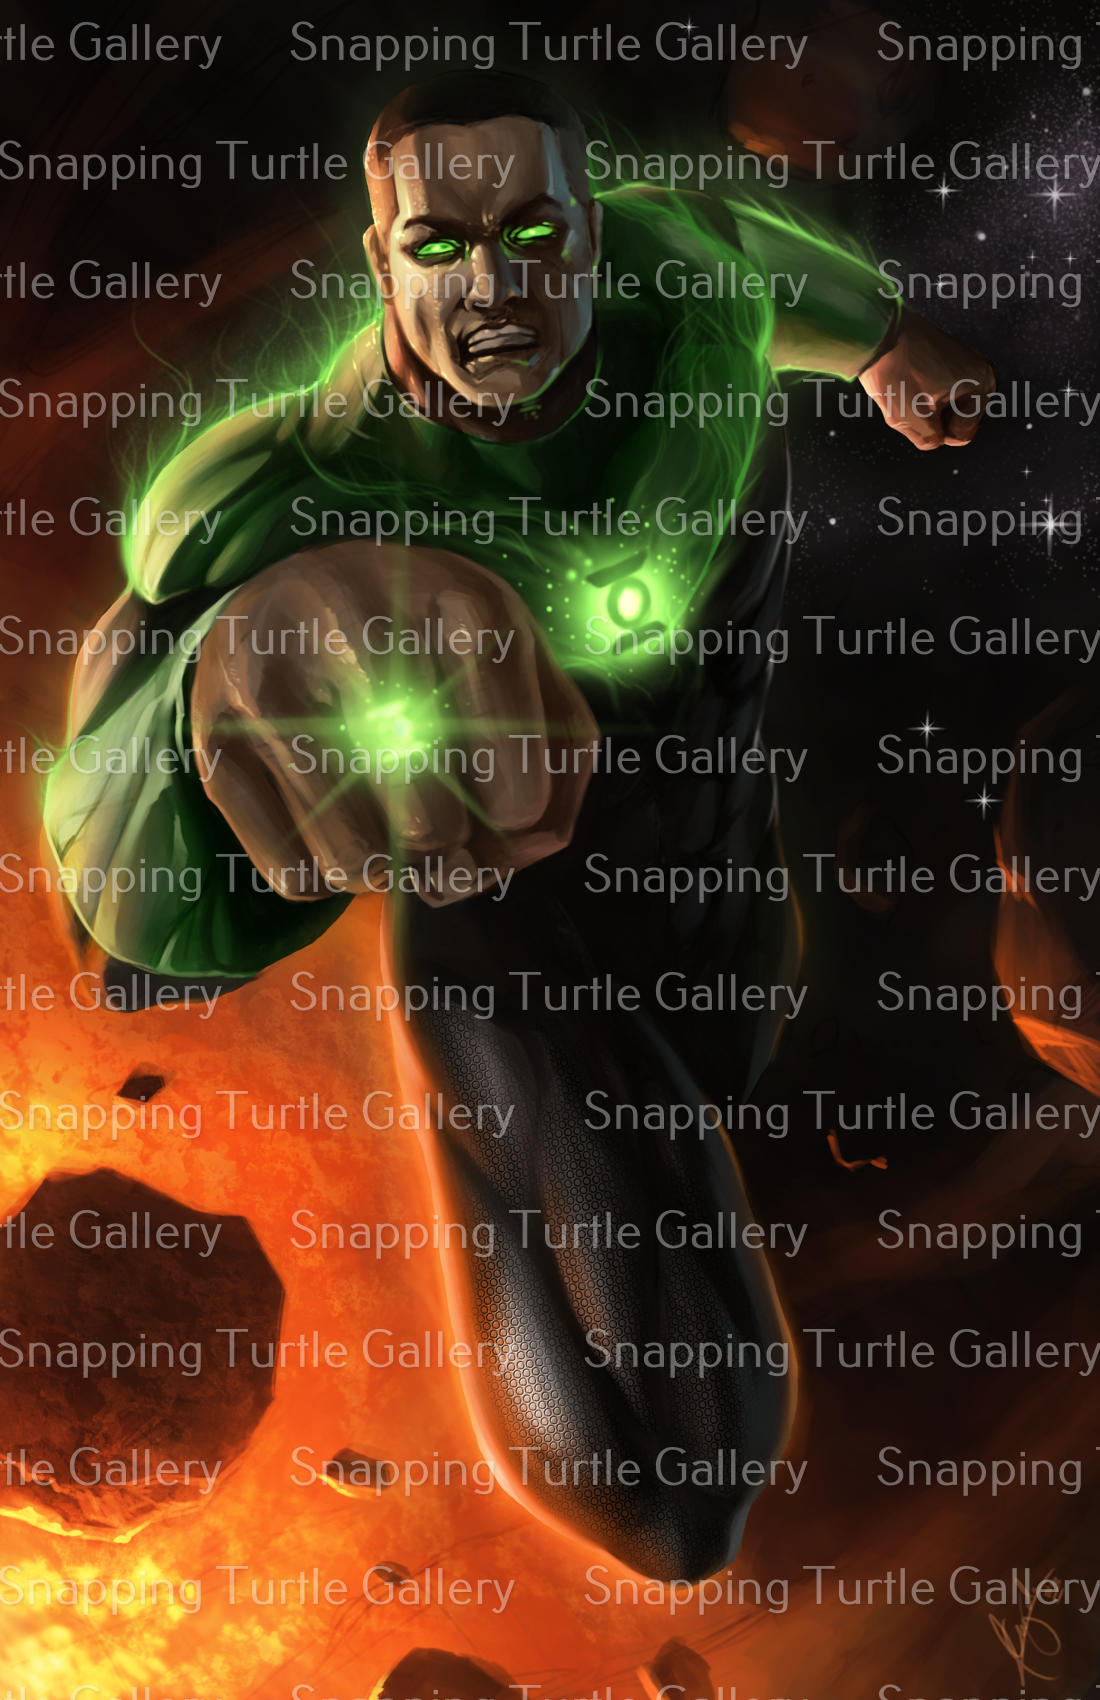 John Stuart - Snapping Turtle Gallery